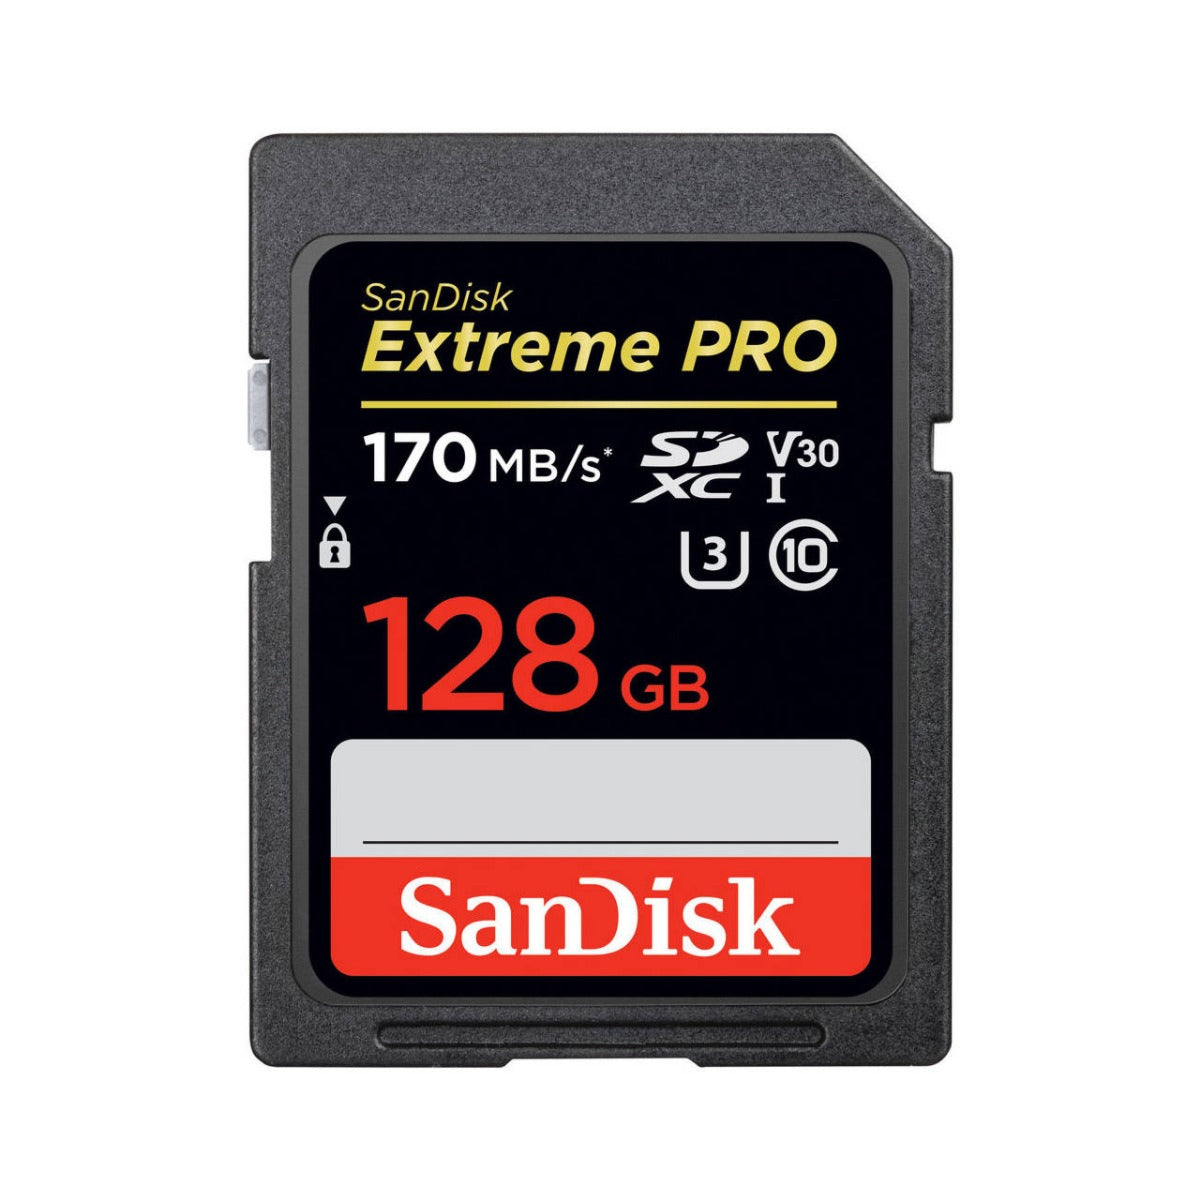 SanDisk 128GB Extreme PRO UHS-I SDXC Memory Card – (170 MB/s*)